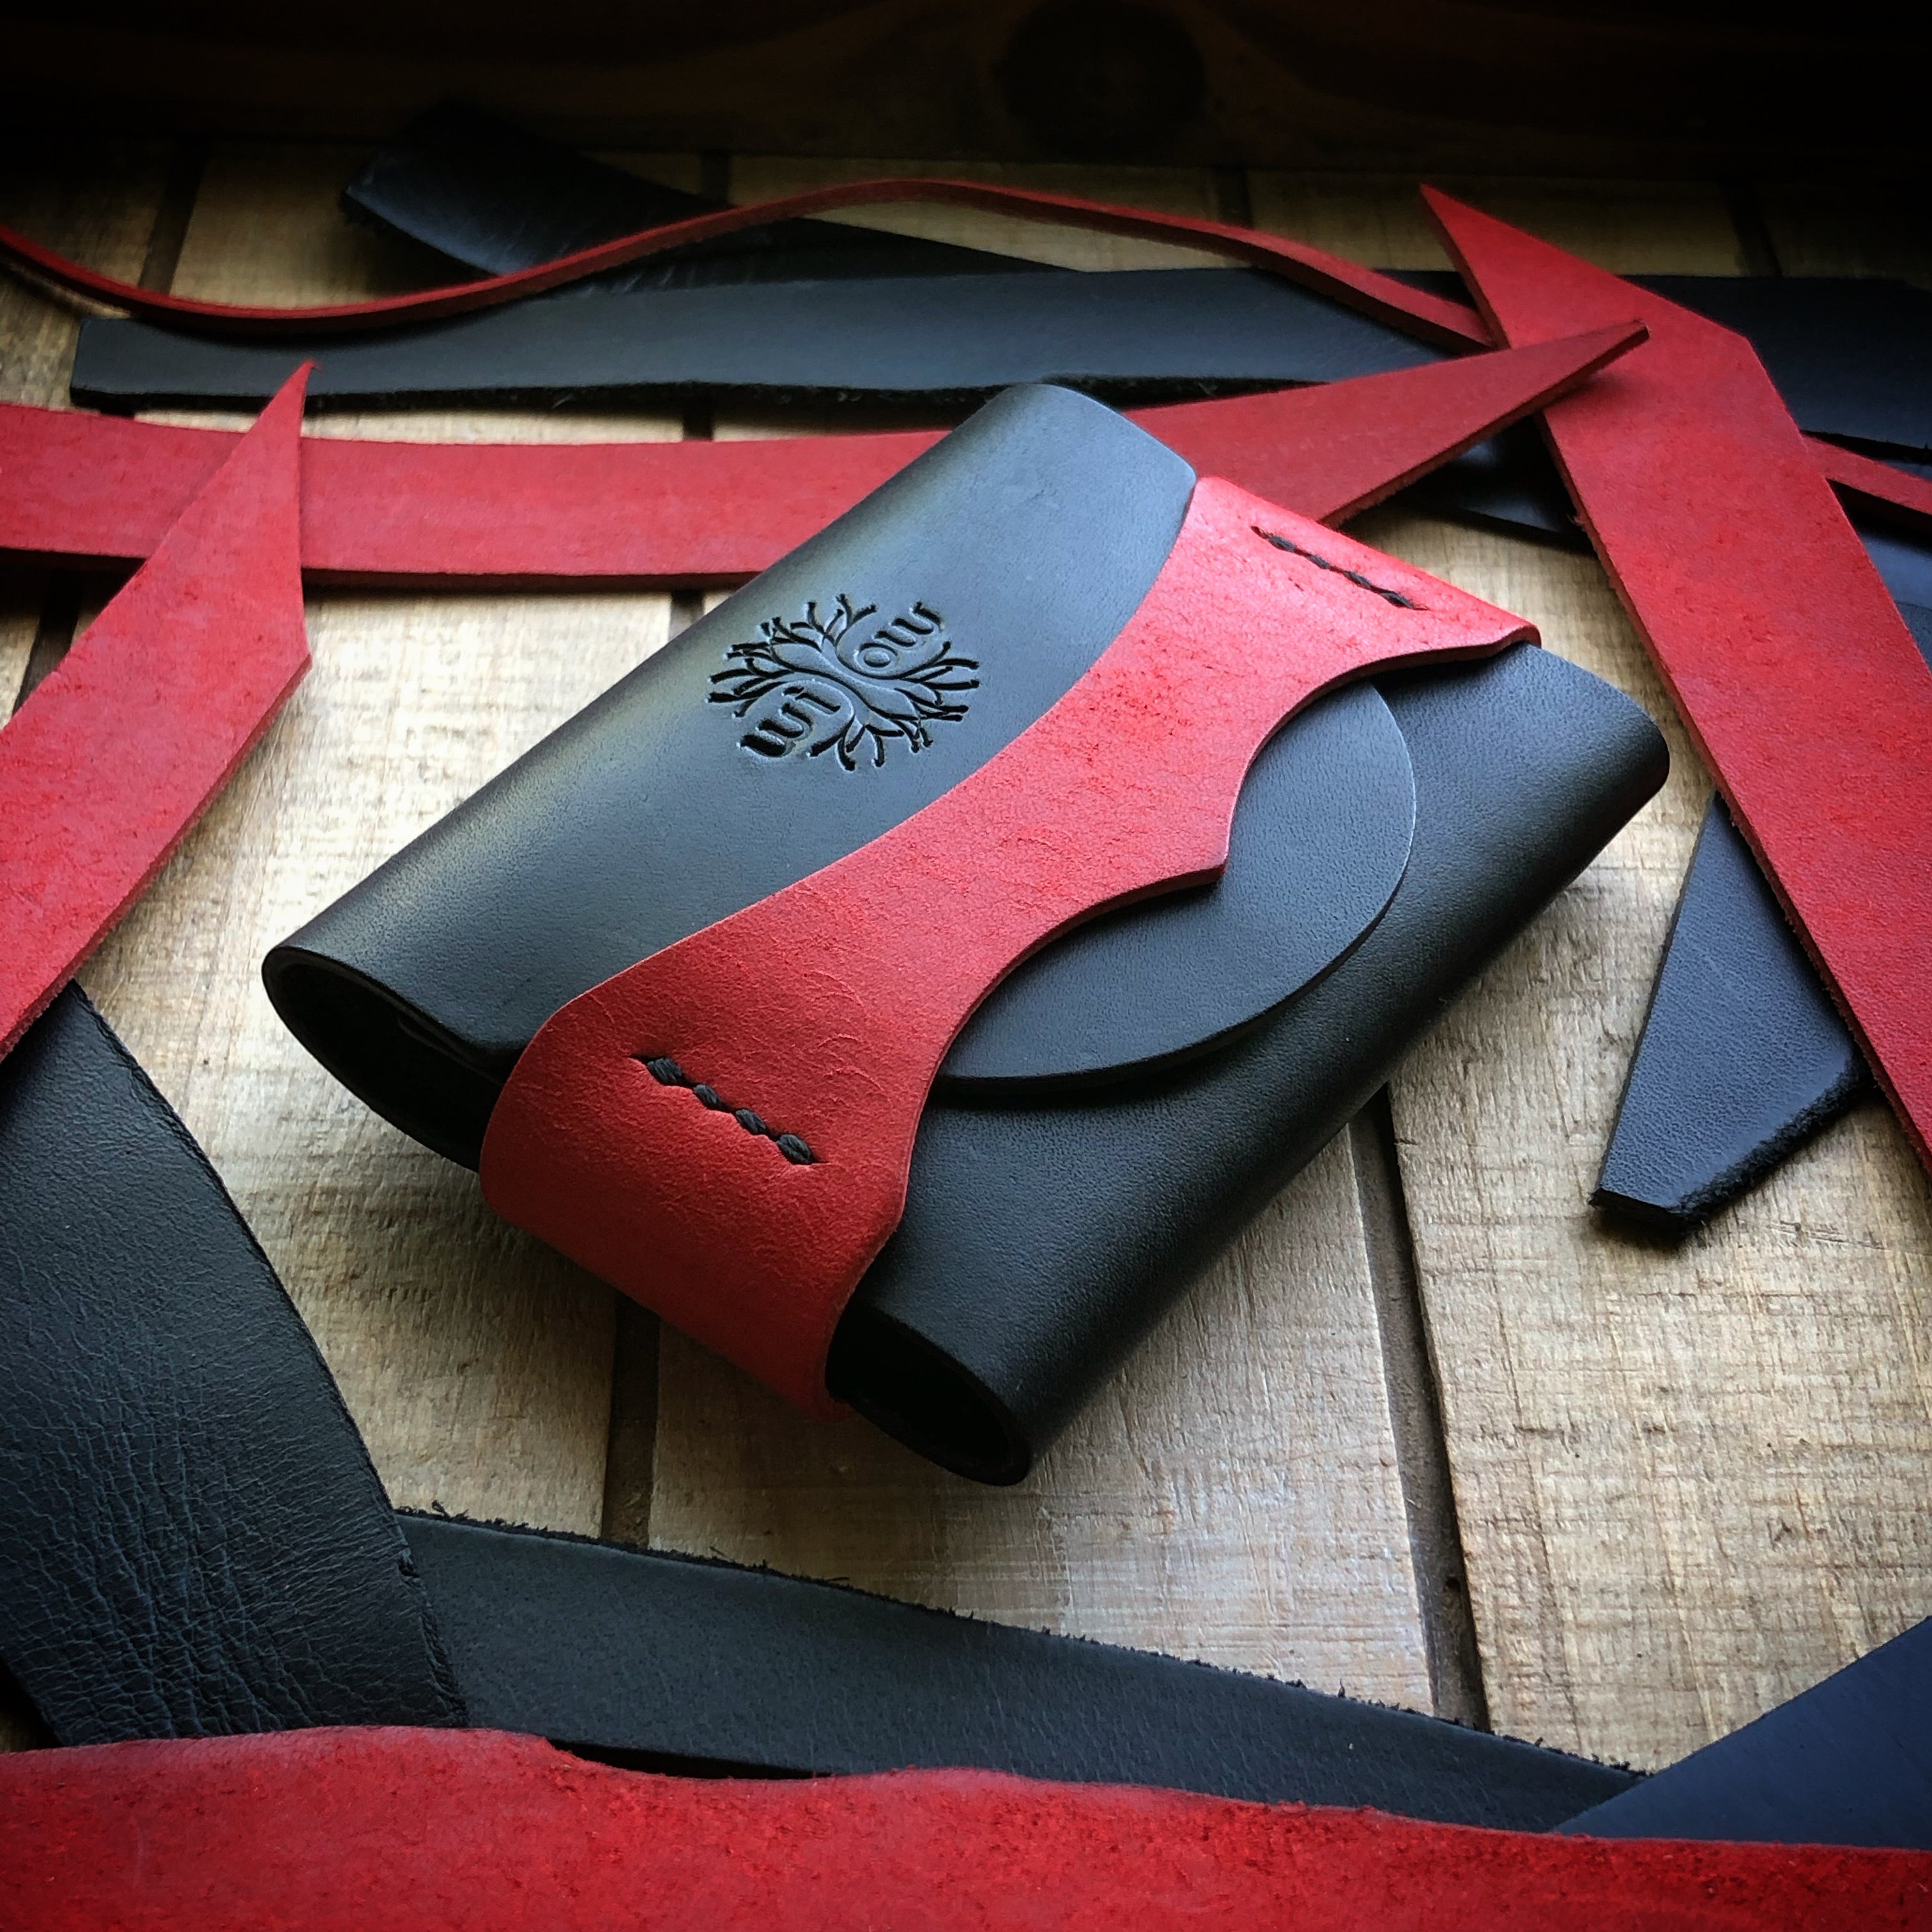 Posh Minimalist Wallet - Black and Red